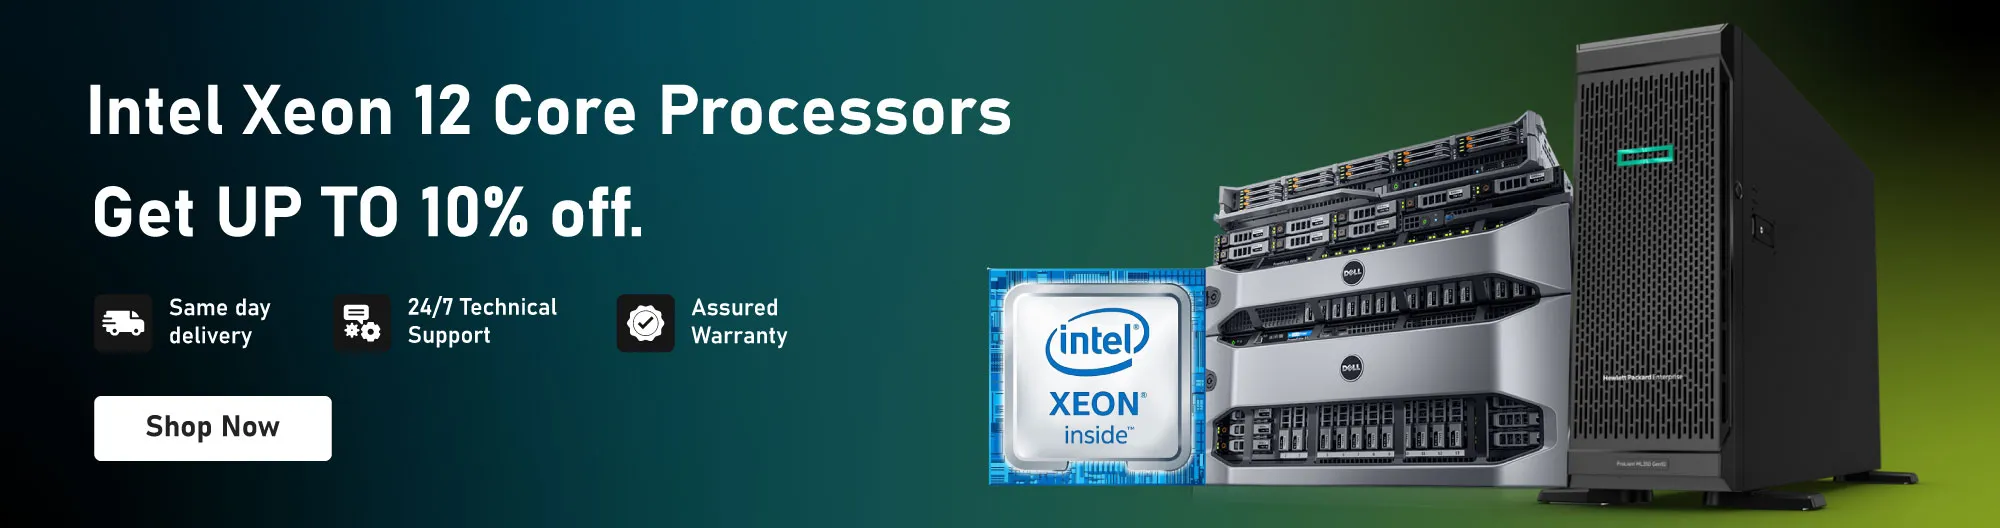 Intel Xeon 12 Core Processors